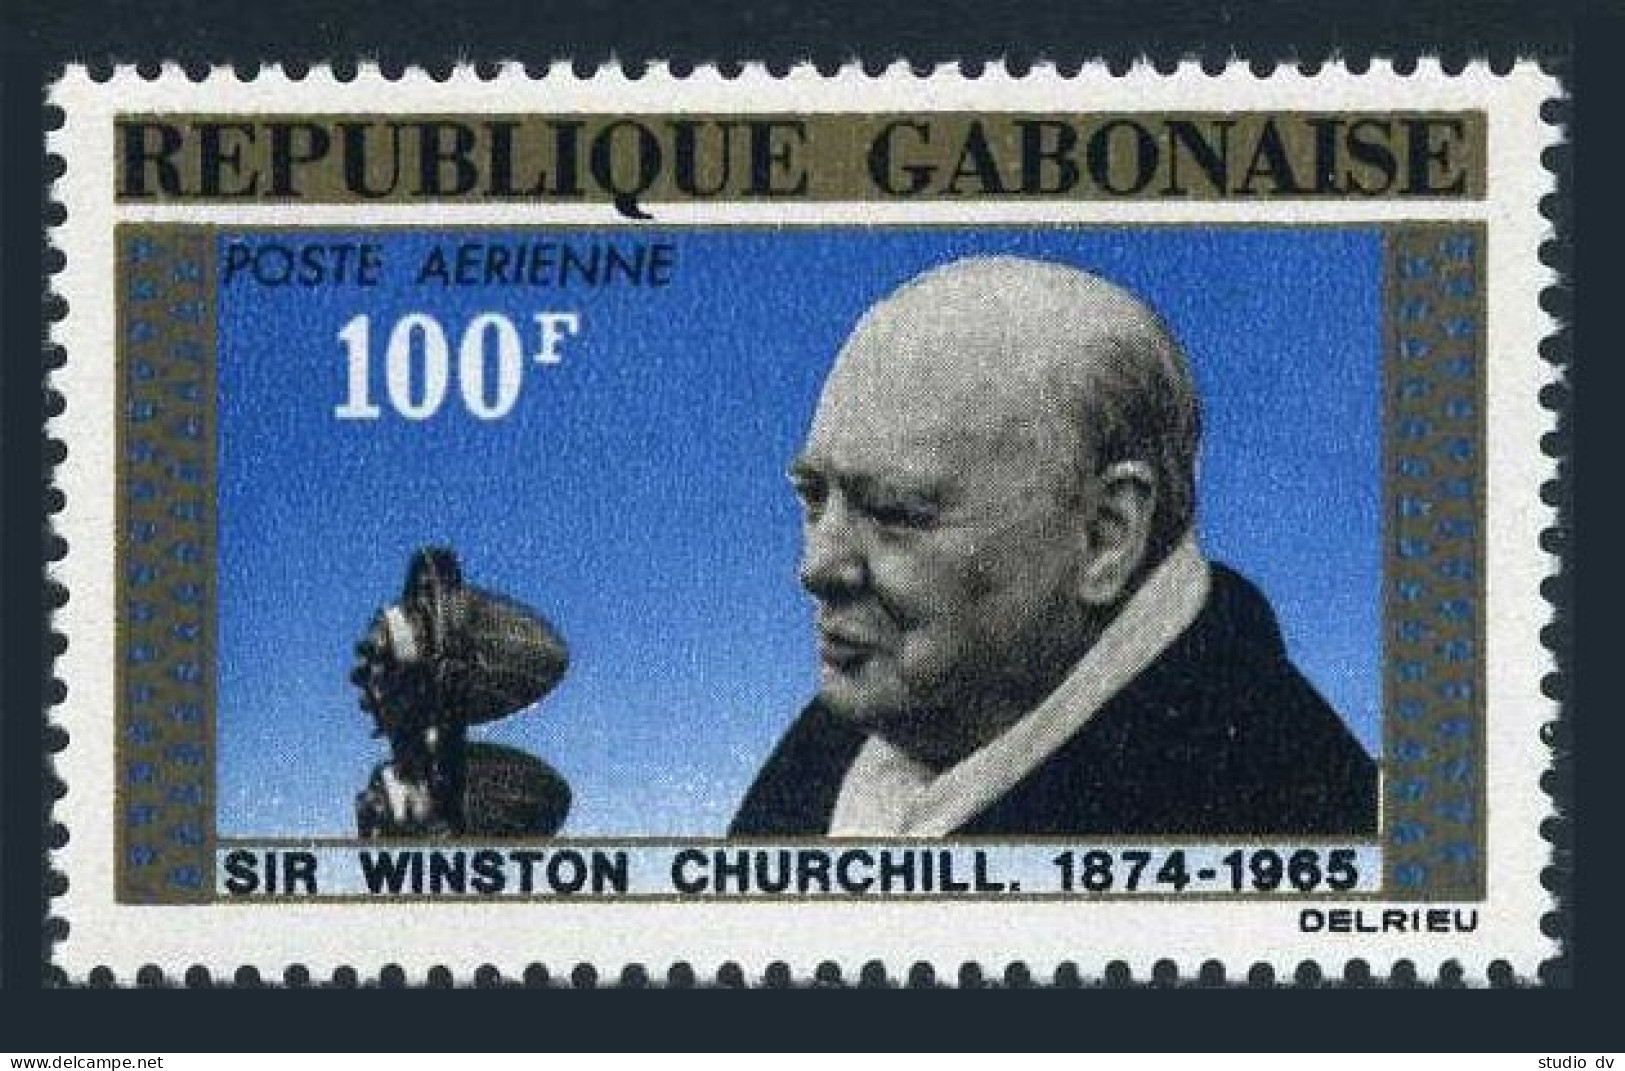 Gabon C38, MNH. Michel 232. Sir Winston Churchill, 1965. - Gabon (1960-...)